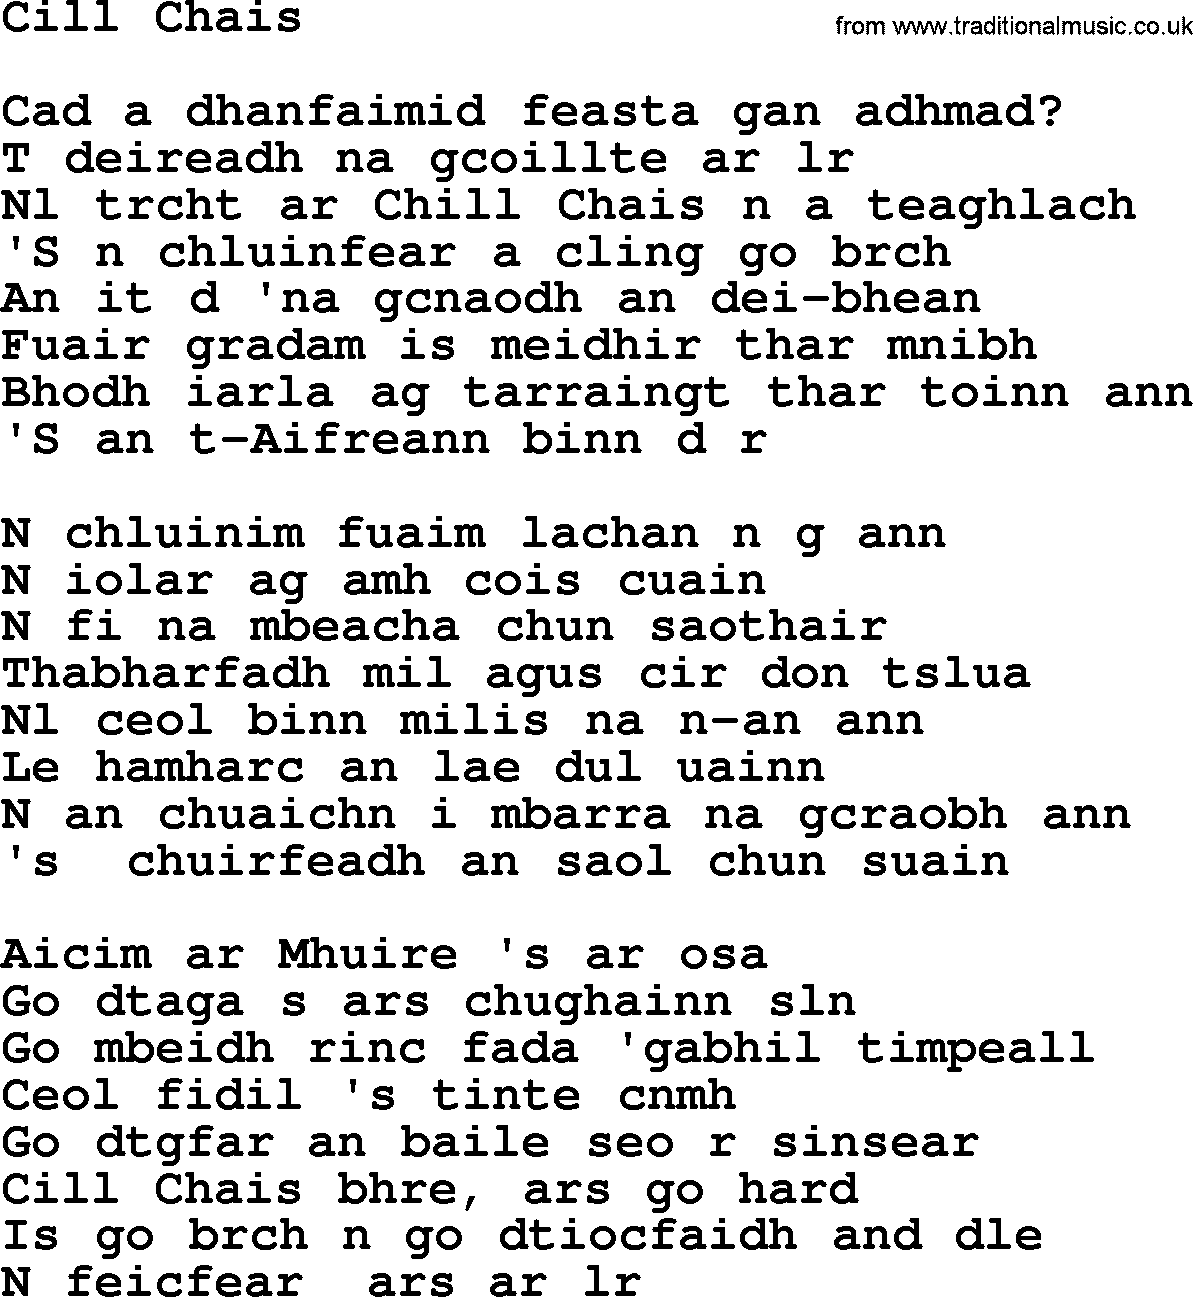 The Dubliners song: Cill Chais, lyrics